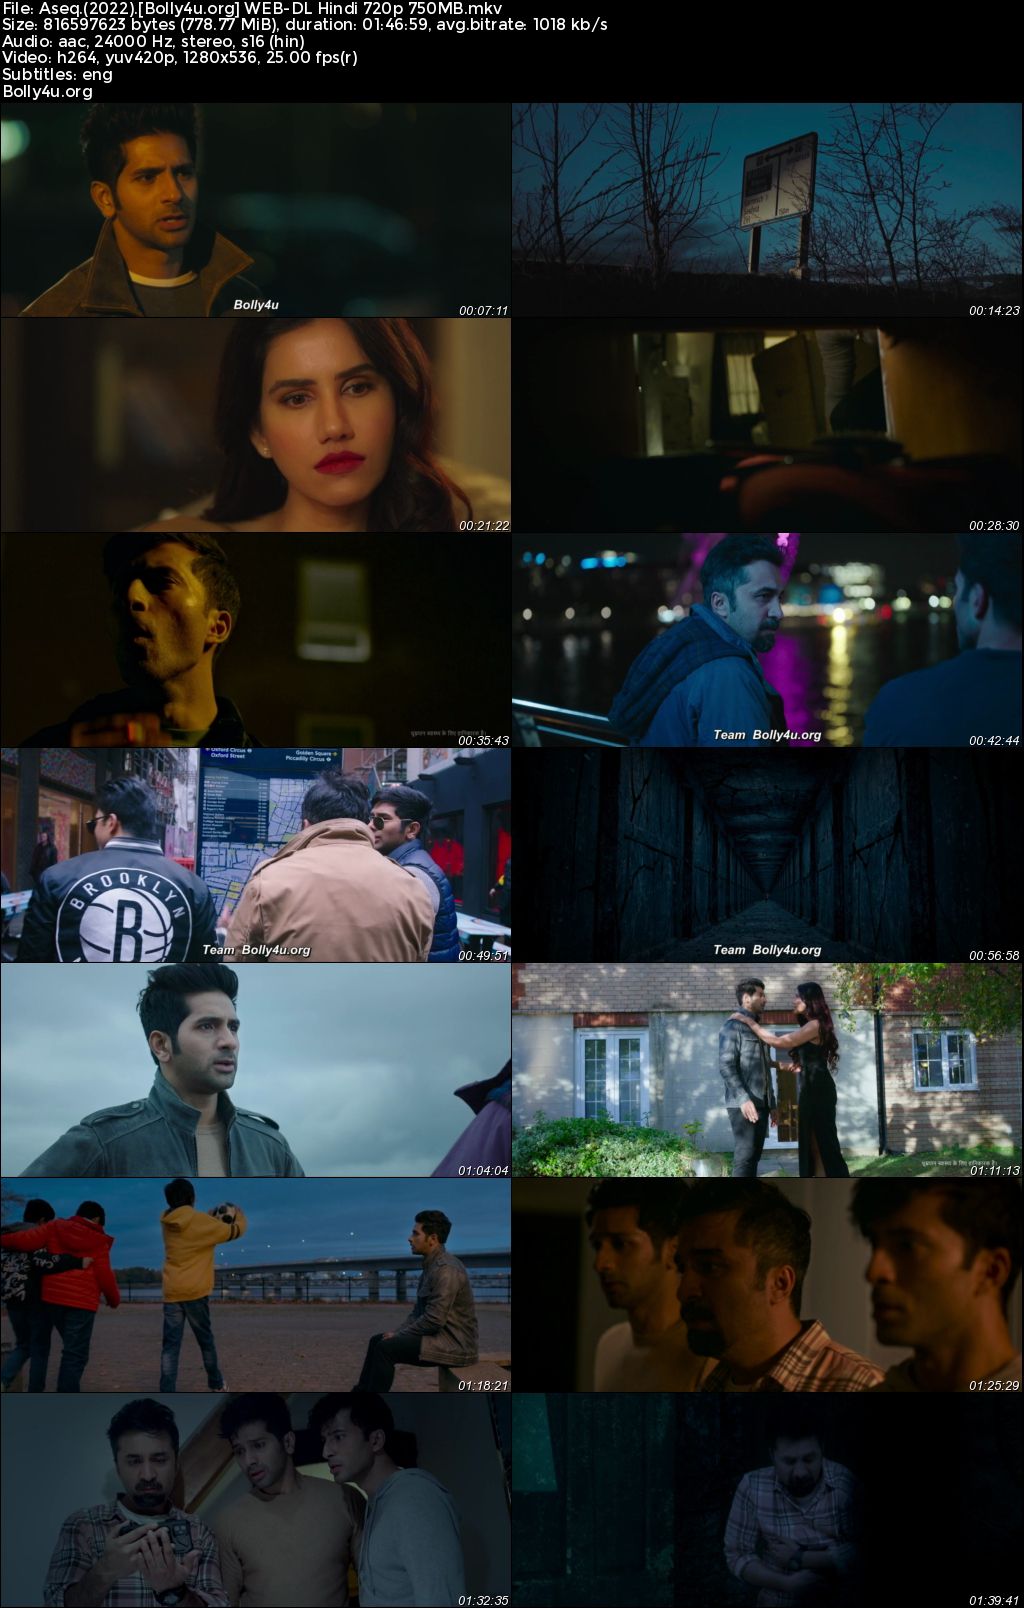 Aseq 2022 WEB-DL Hindi Full Movie Download 1080p 720p 480p